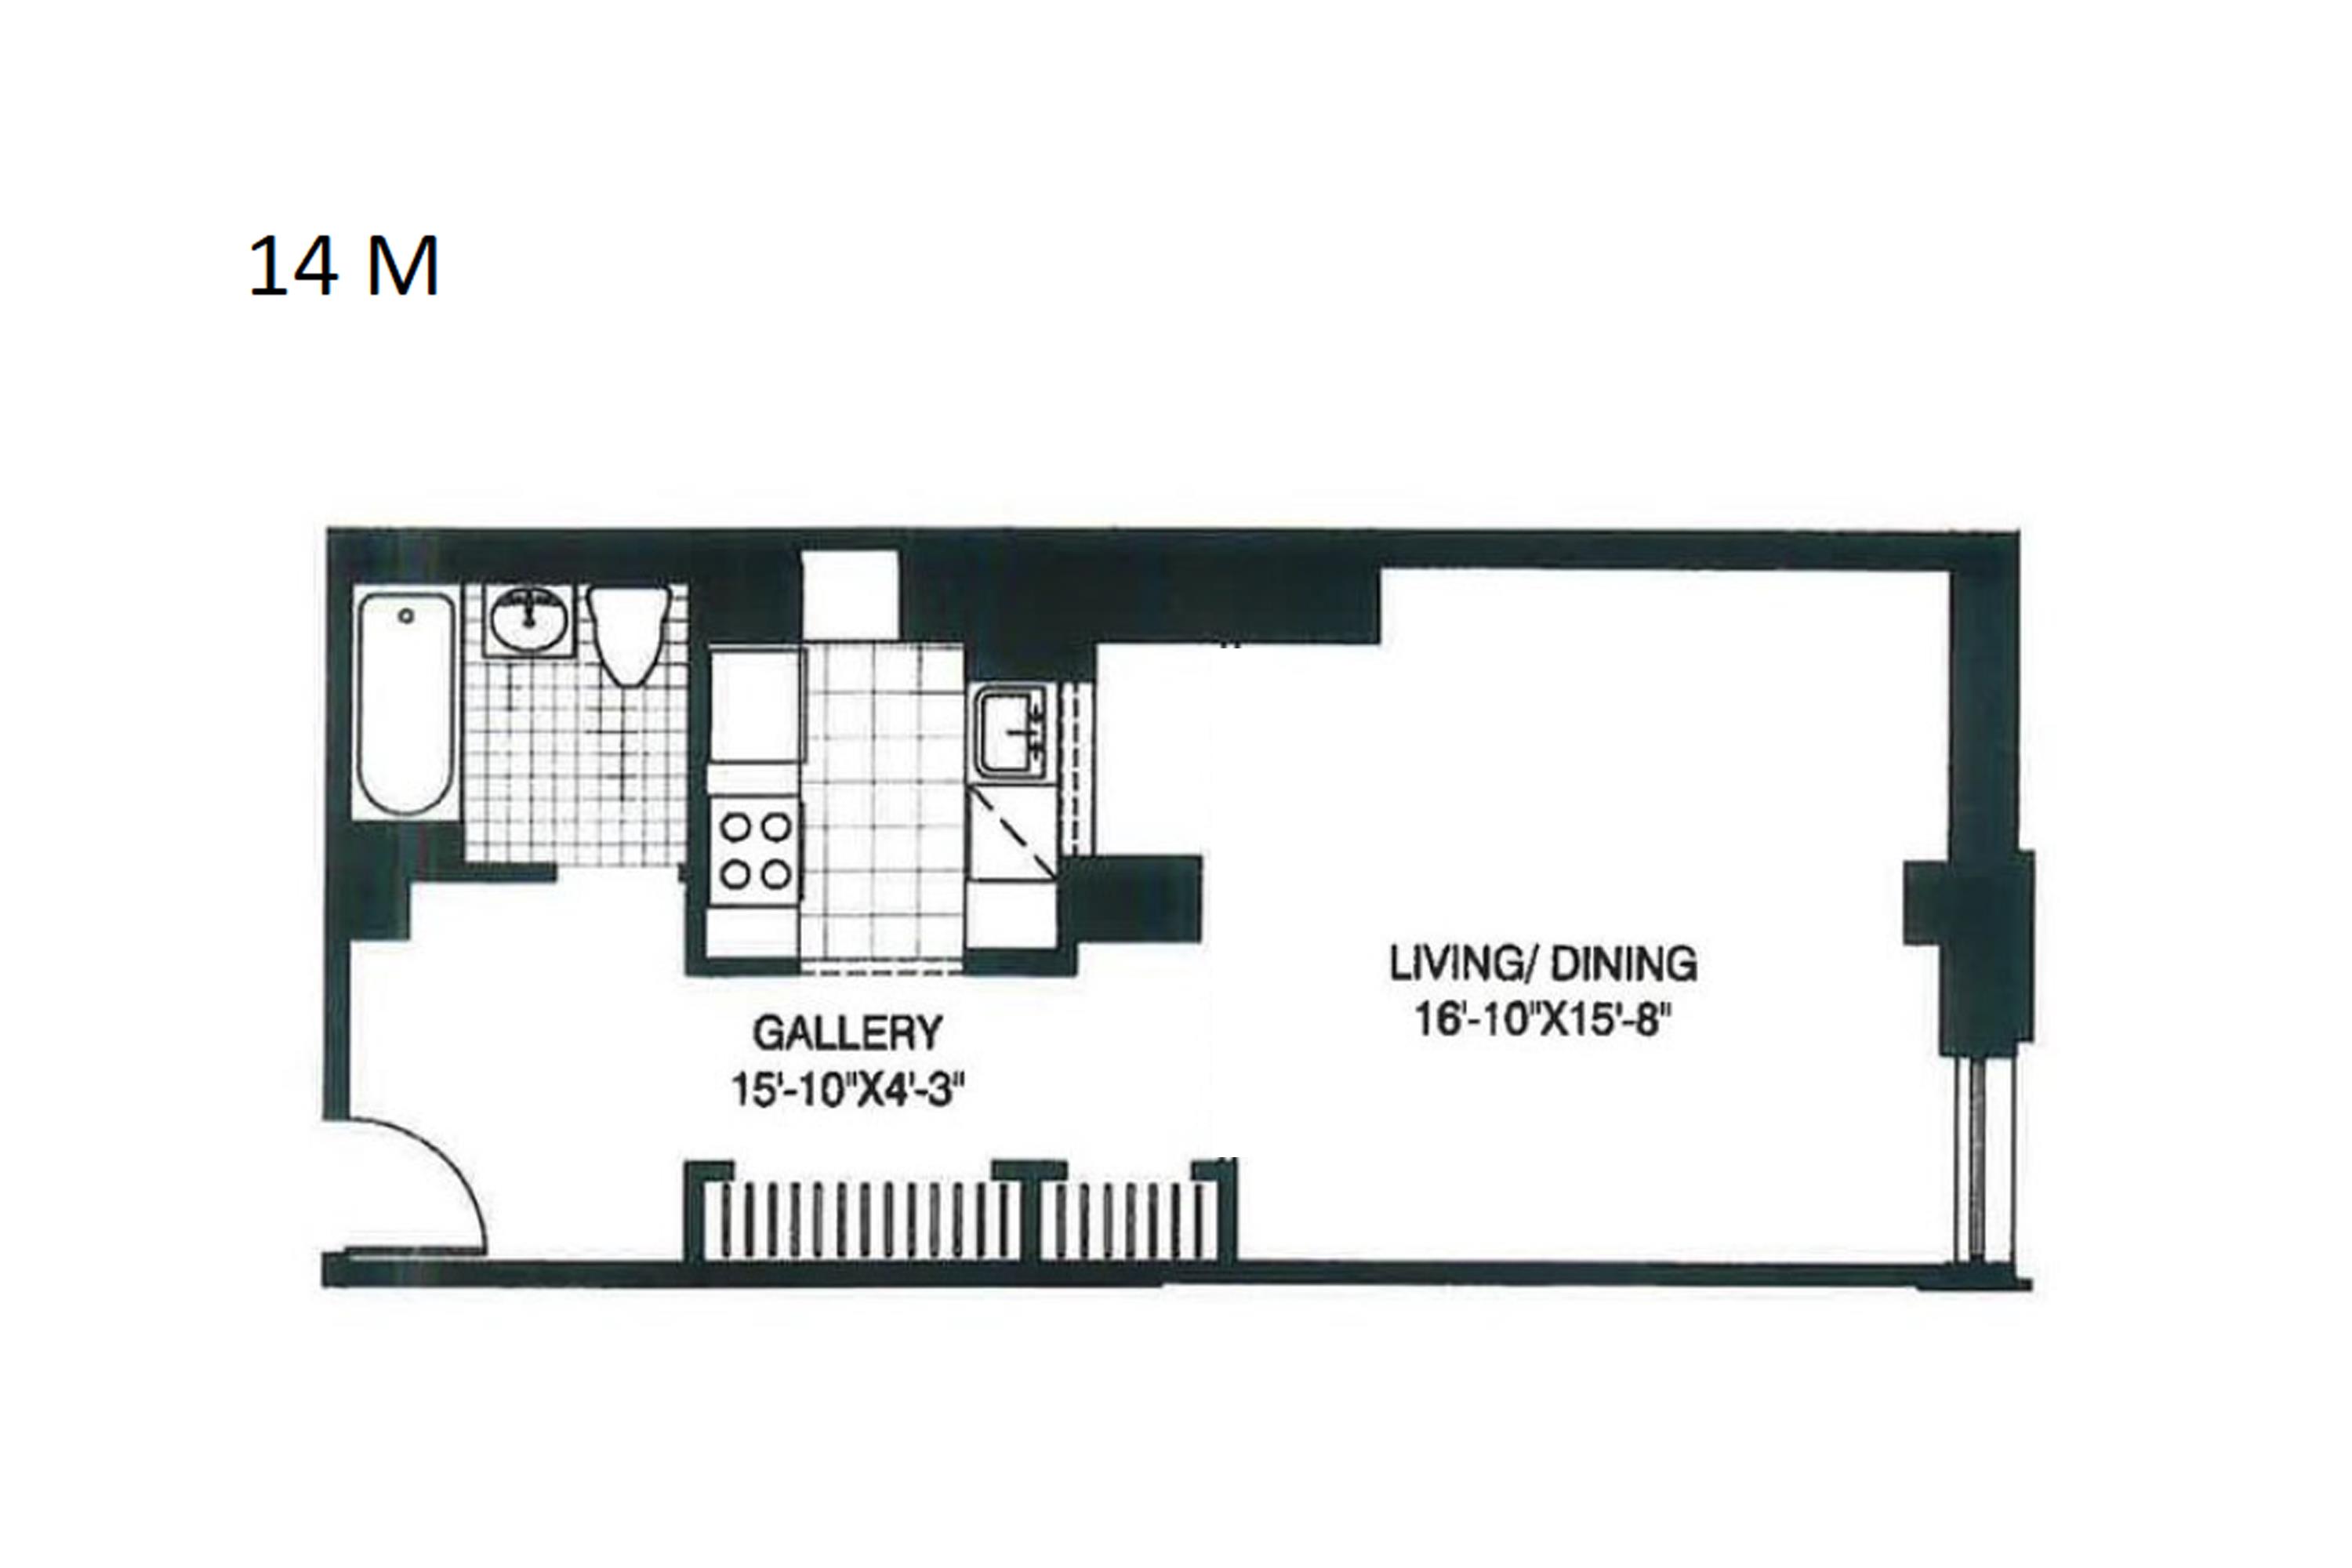 Floorplan for 20 West Street, 14-M